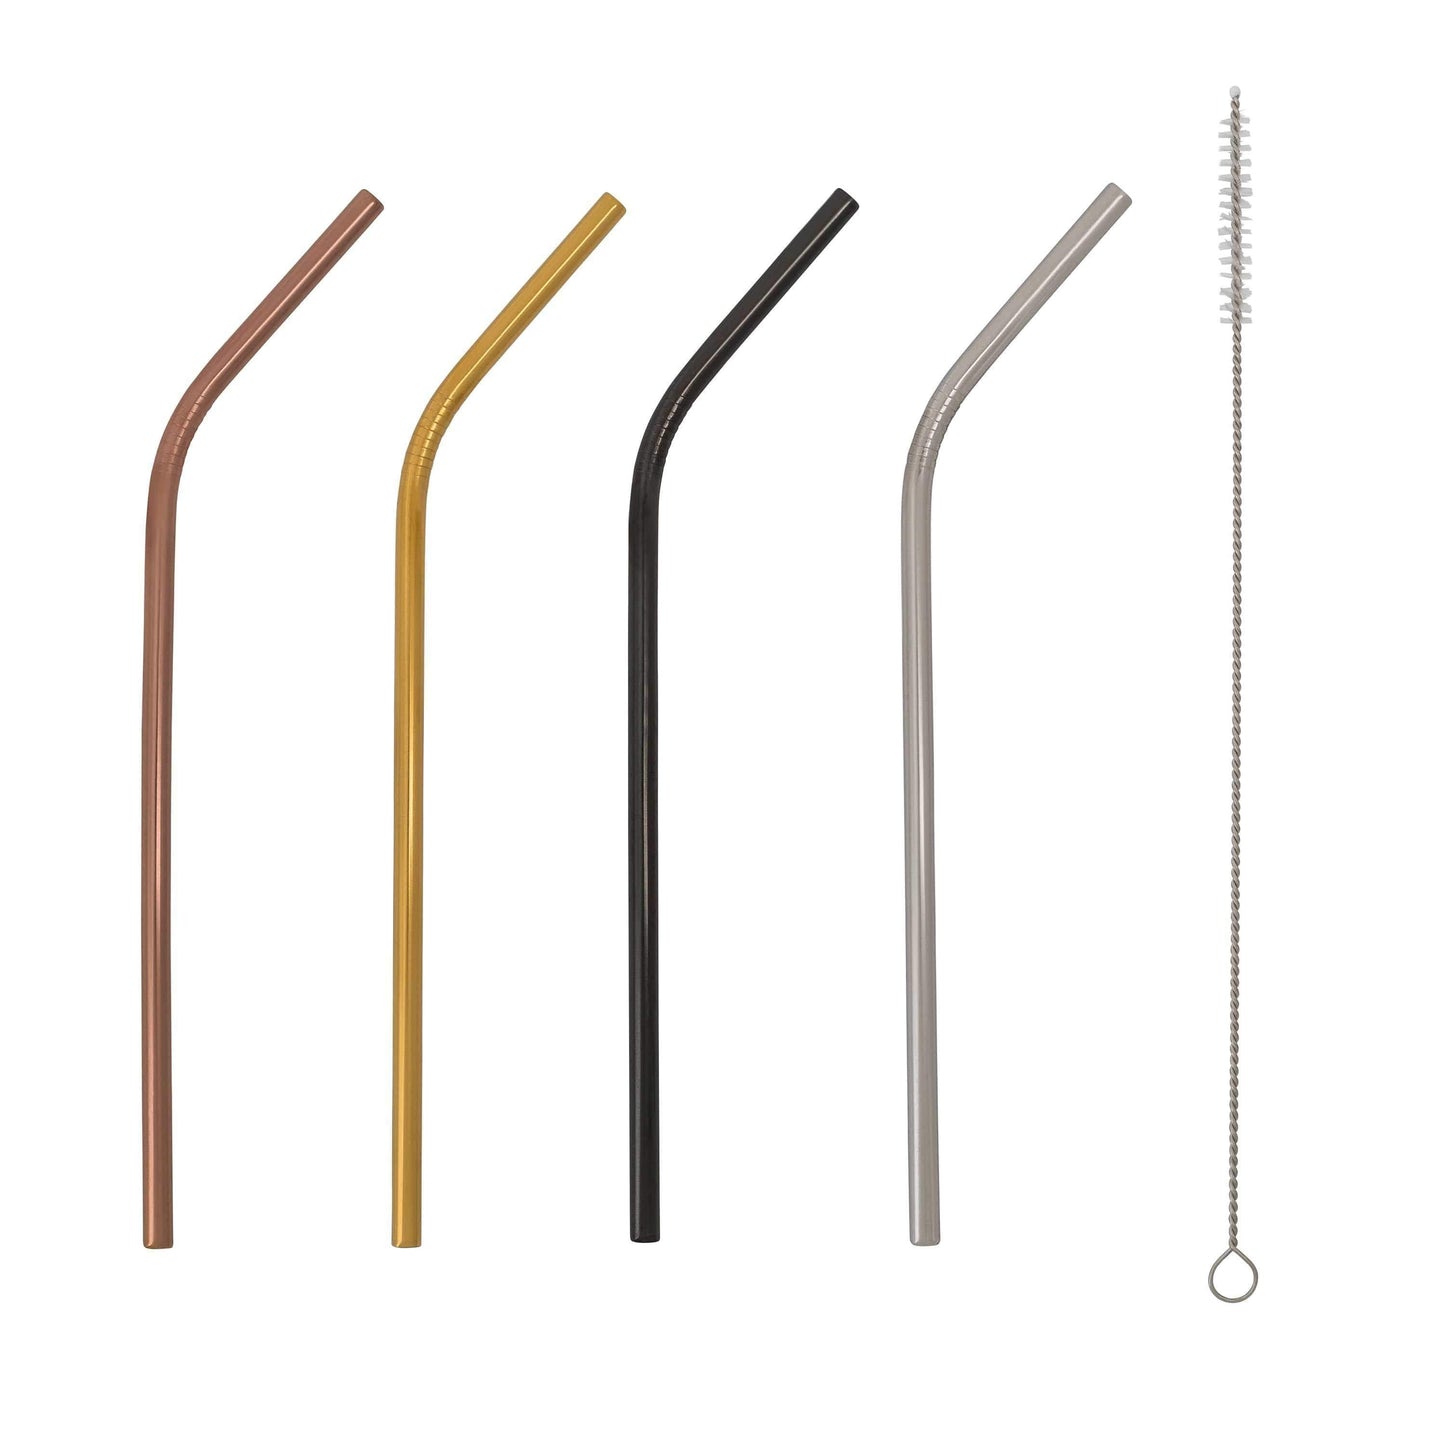 Seoul Straw - Nordic Side - __tab1:handle-care, bis-hidden, dining, straws, utensils